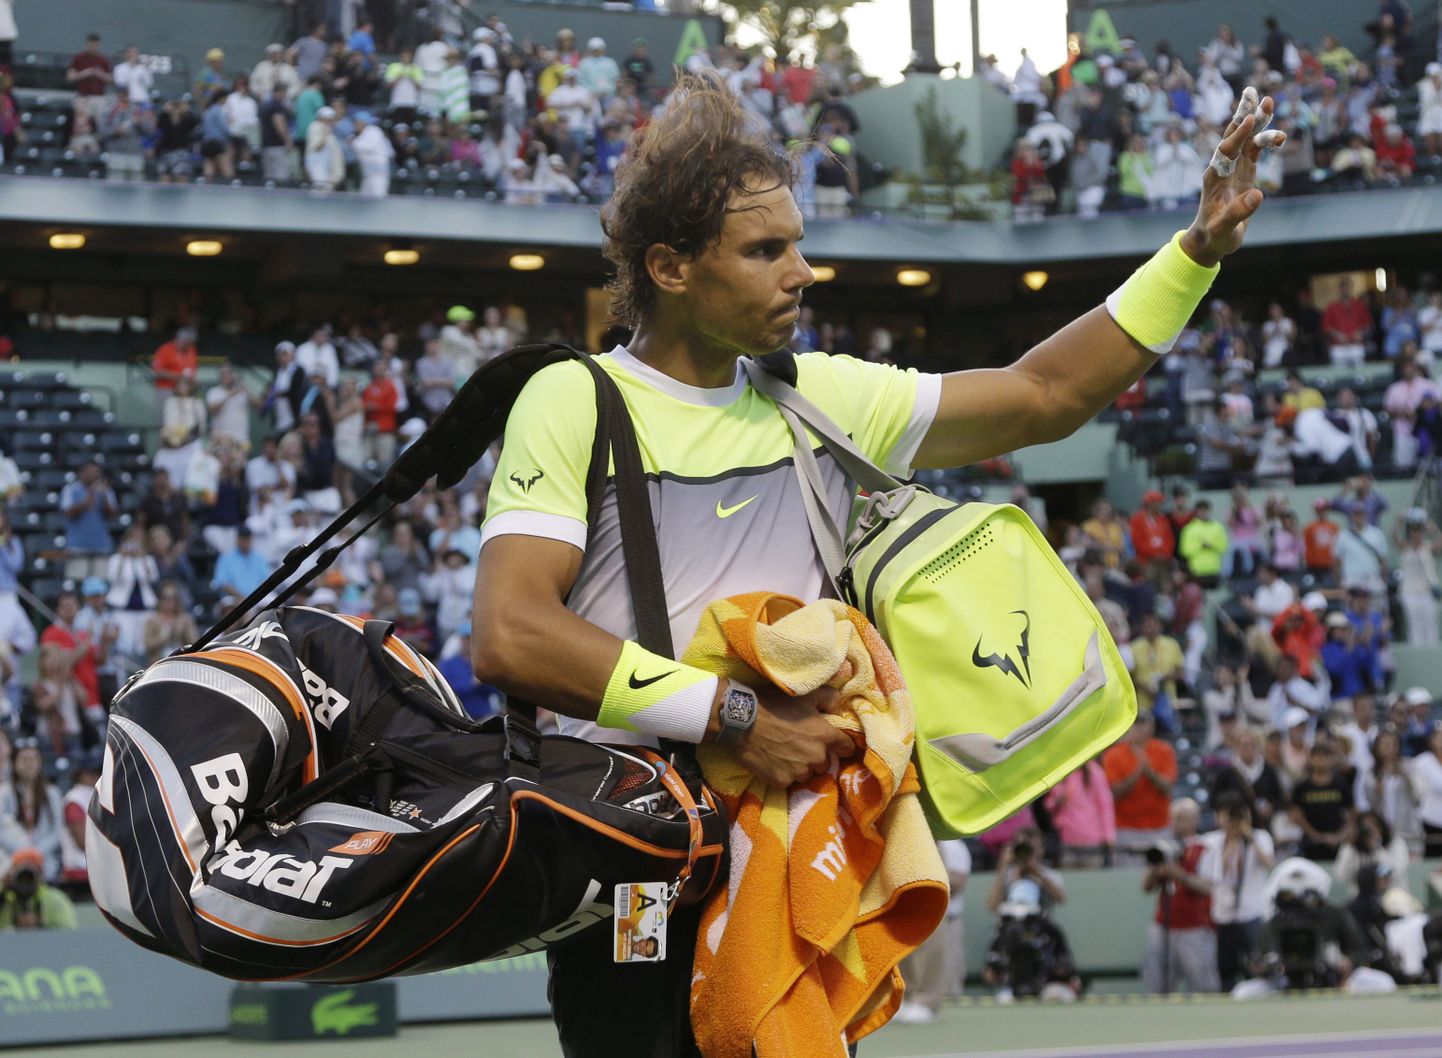 Rafael Nadal on murelik.